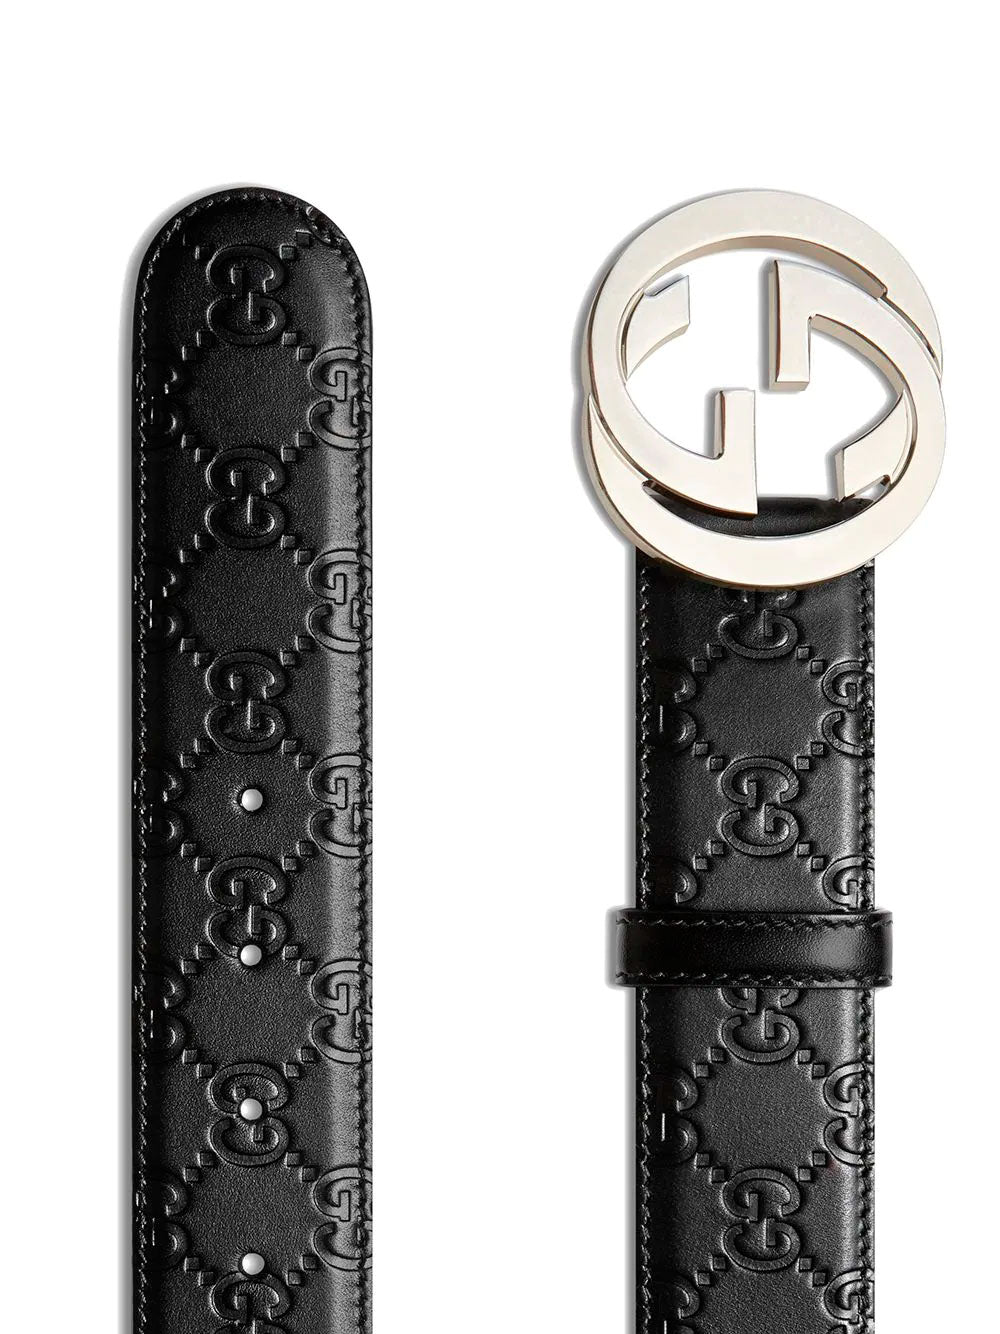 Signature leather belt